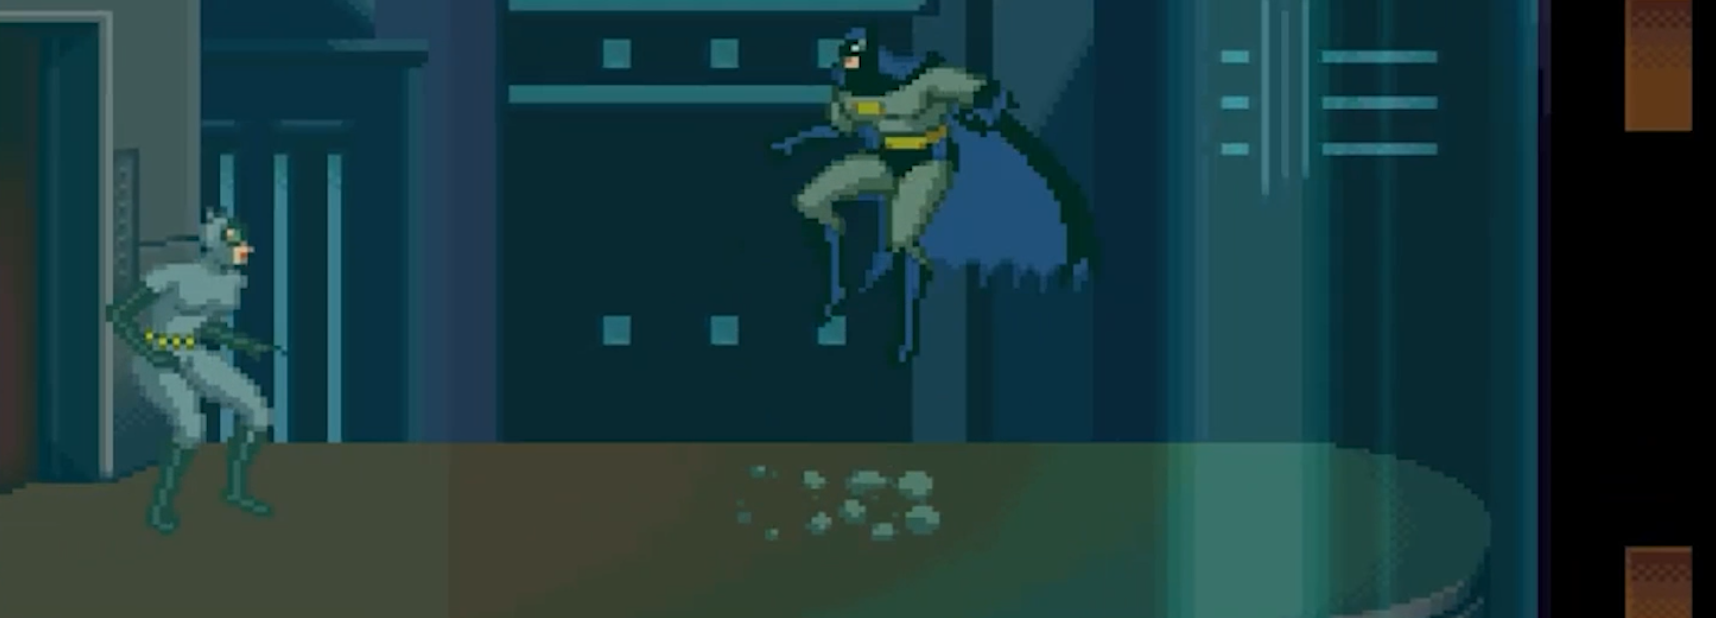 SNES Underrated Super Nintendo Games-The Adventures of Batman and Robin